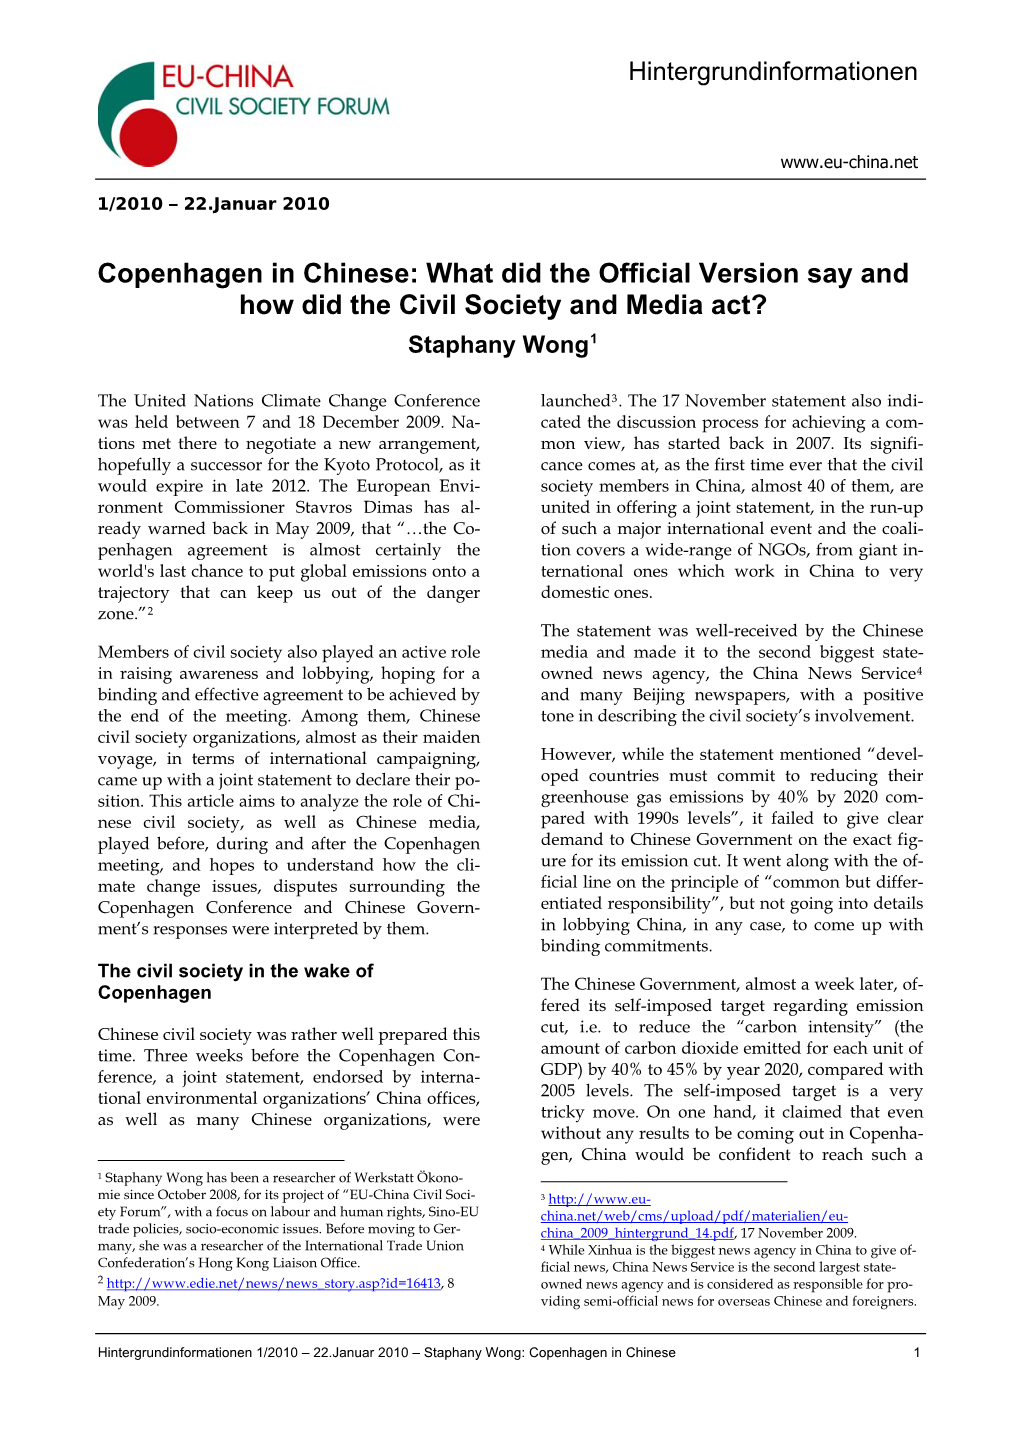 Staphany Wong: Copenhagen and China